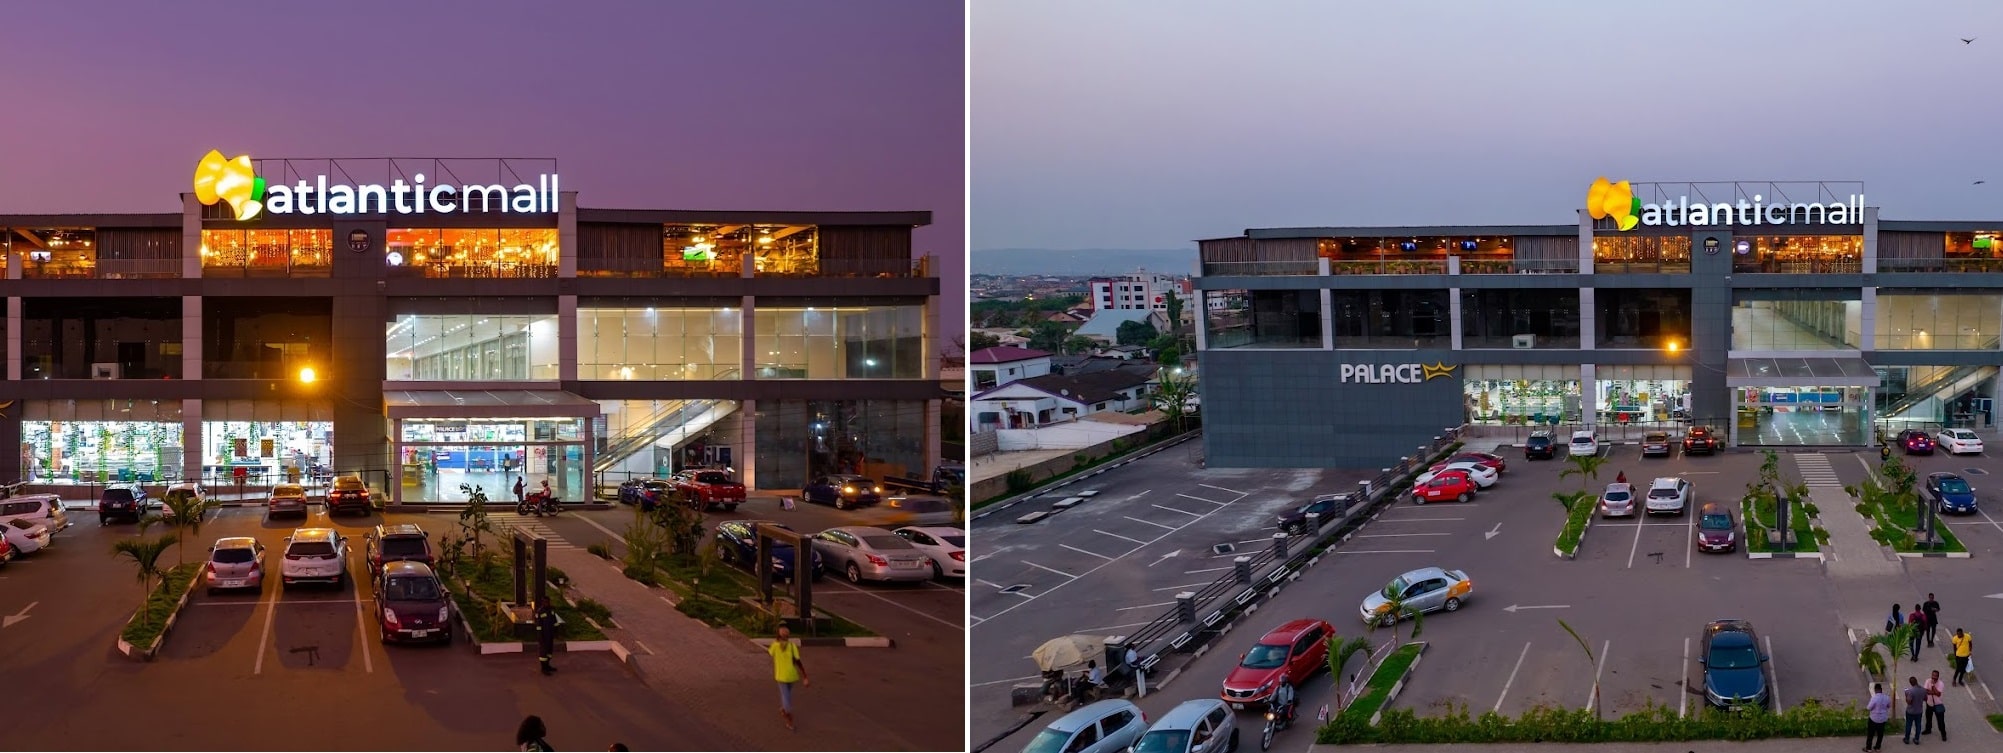 Atlantic Mall Accra | Palace Shopping Mall (Atomic Junction)